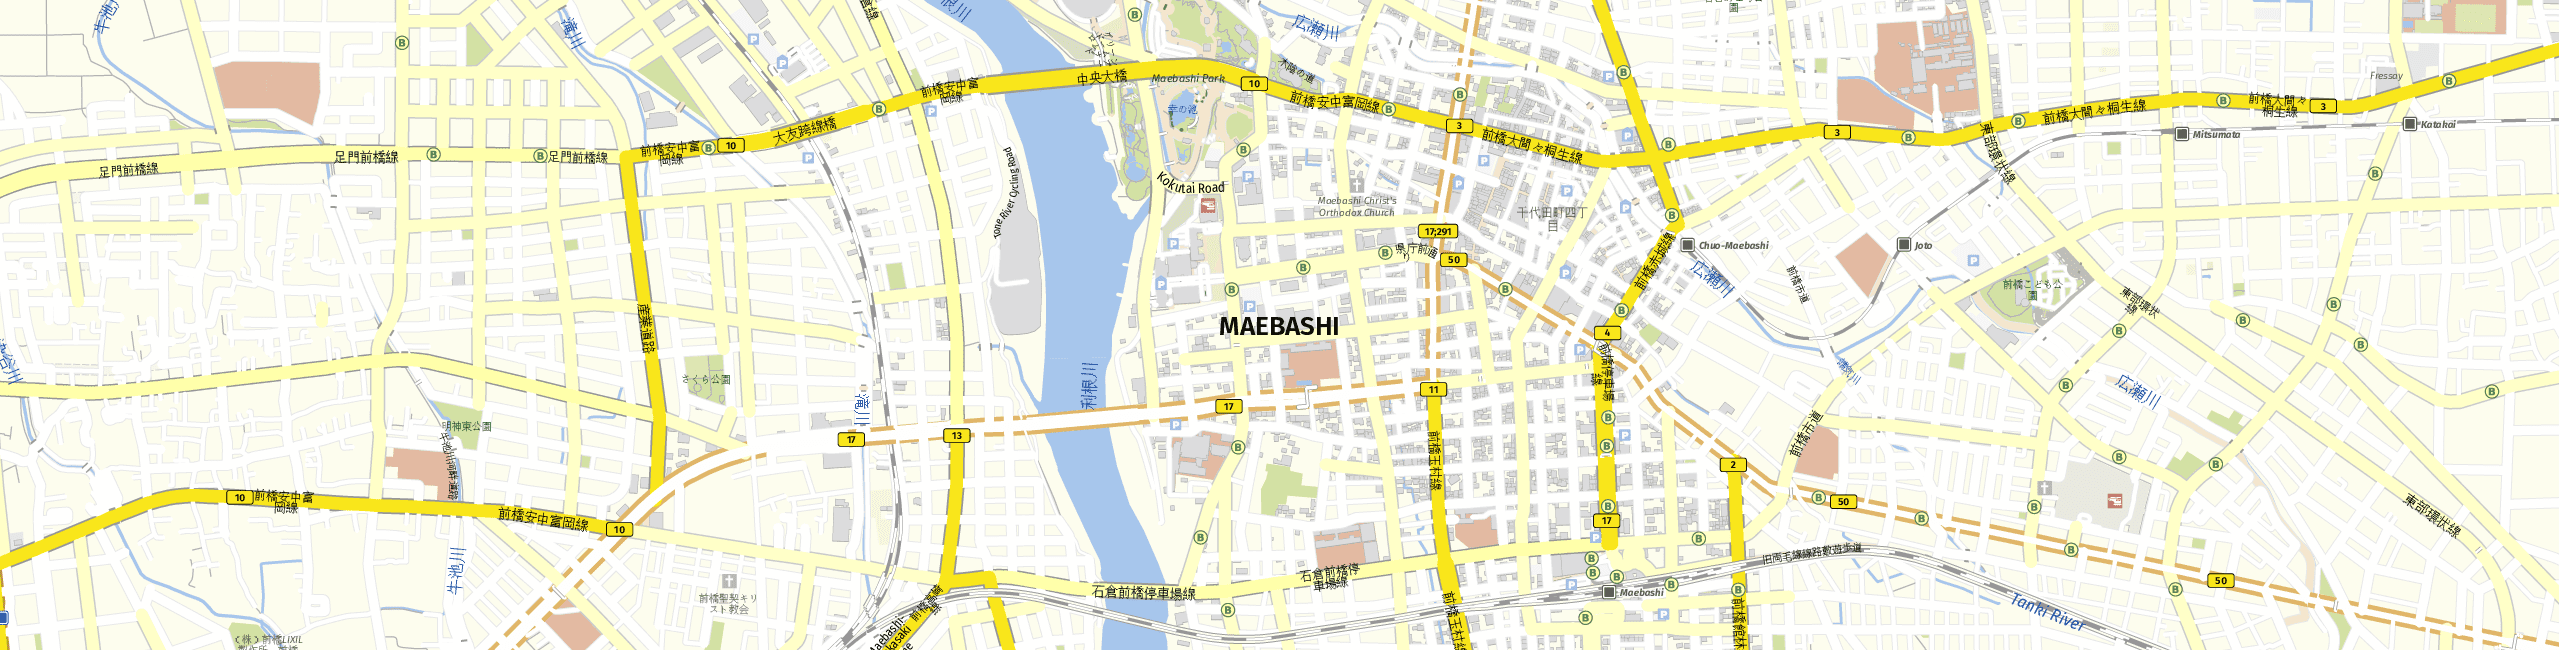 Stadtplan Maebashi zum Downloaden.